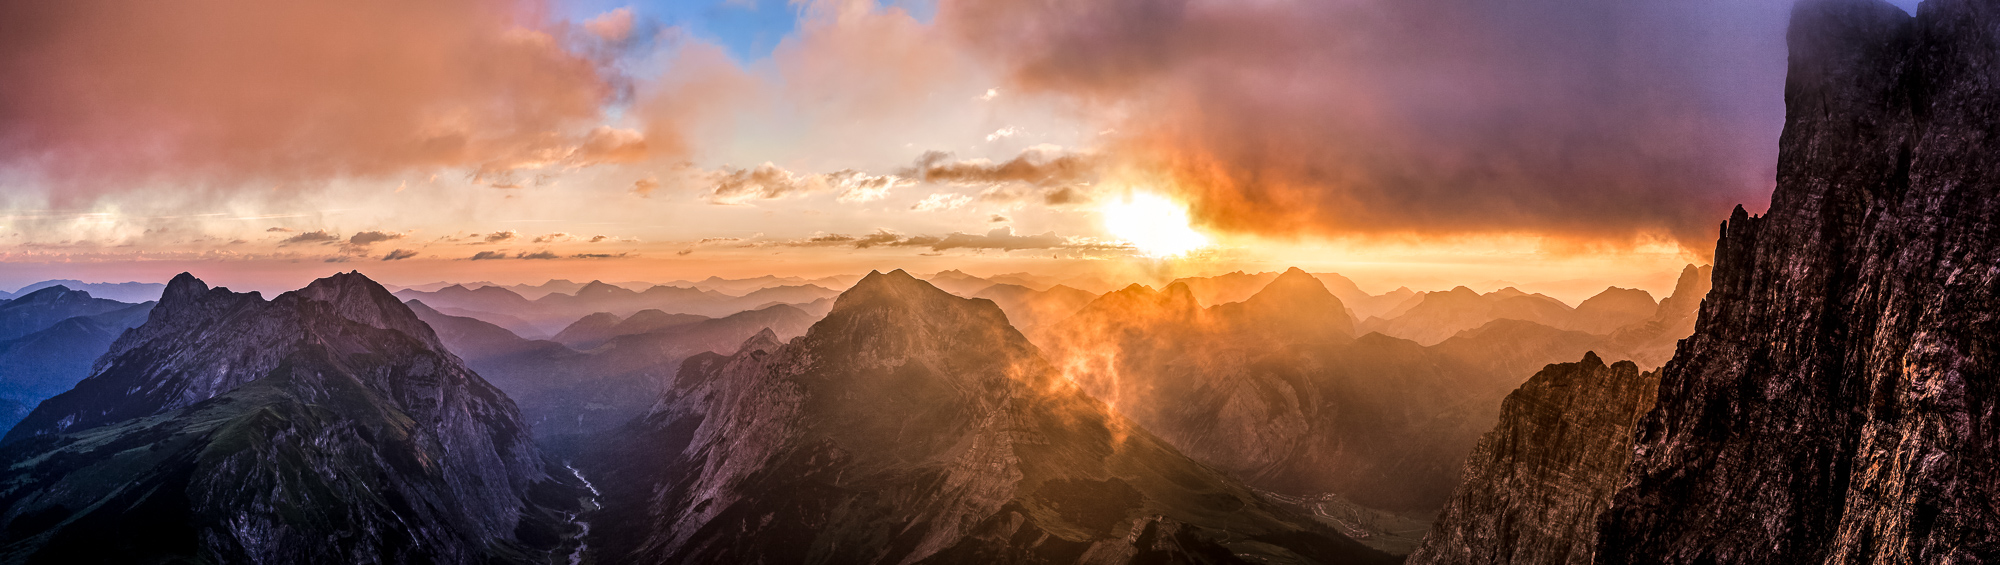 Laliderer Wand bei Sonnenaufgang. Panorama im Karwendel. Wolkenstimmung!